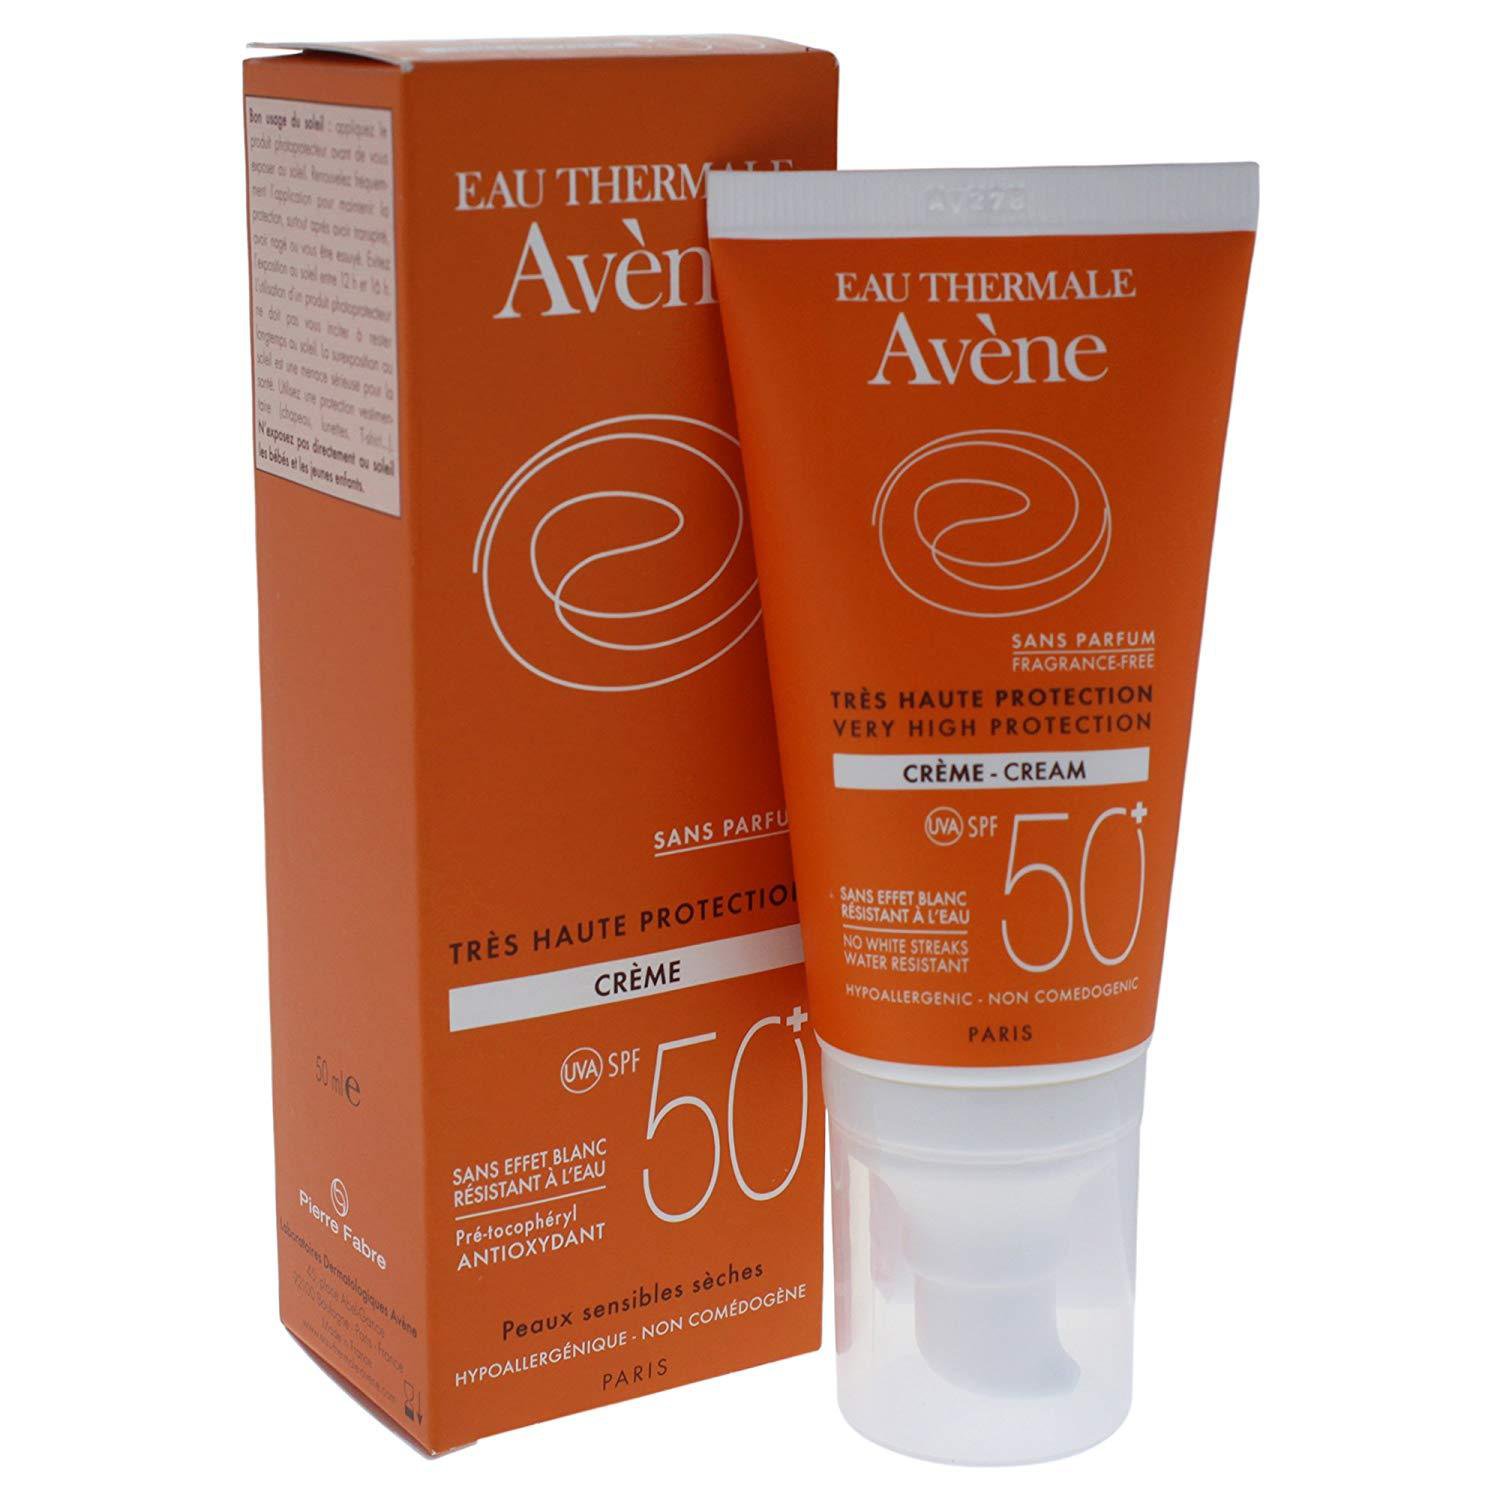 Avene spf 50 для лица. Avene very High Protection spf50 Cream. Avene 50+ very High Protection. Avene крем солнцезащитный SPF 50+ 50 мл. Крем от солнца Авен 50.